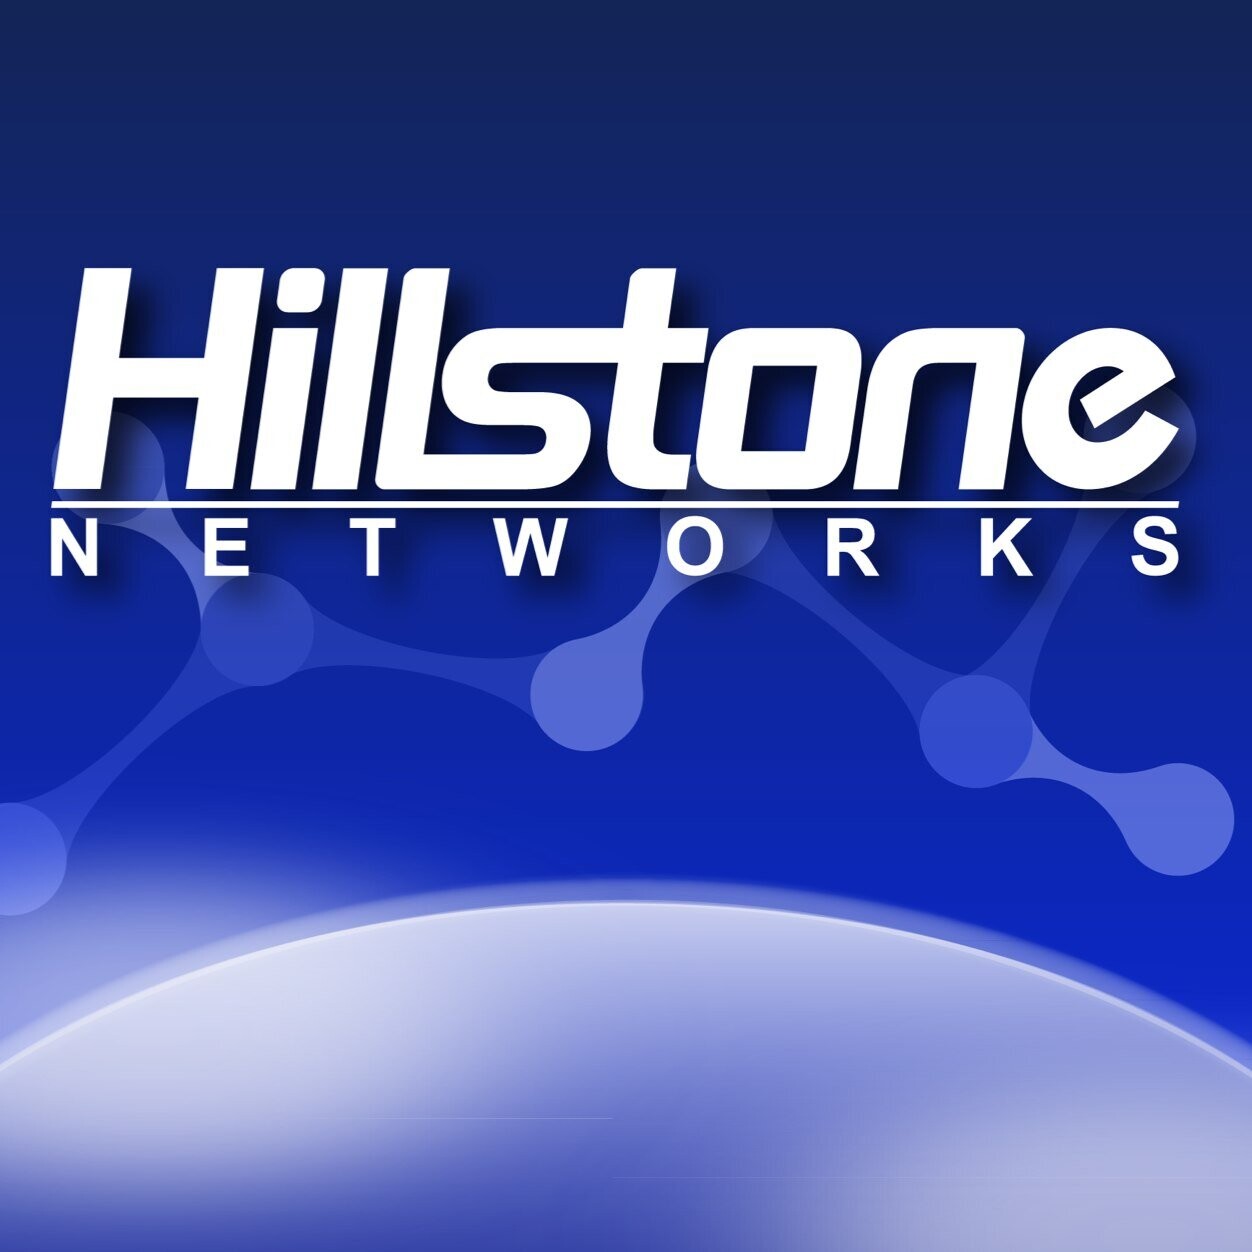 Hillstone Networks